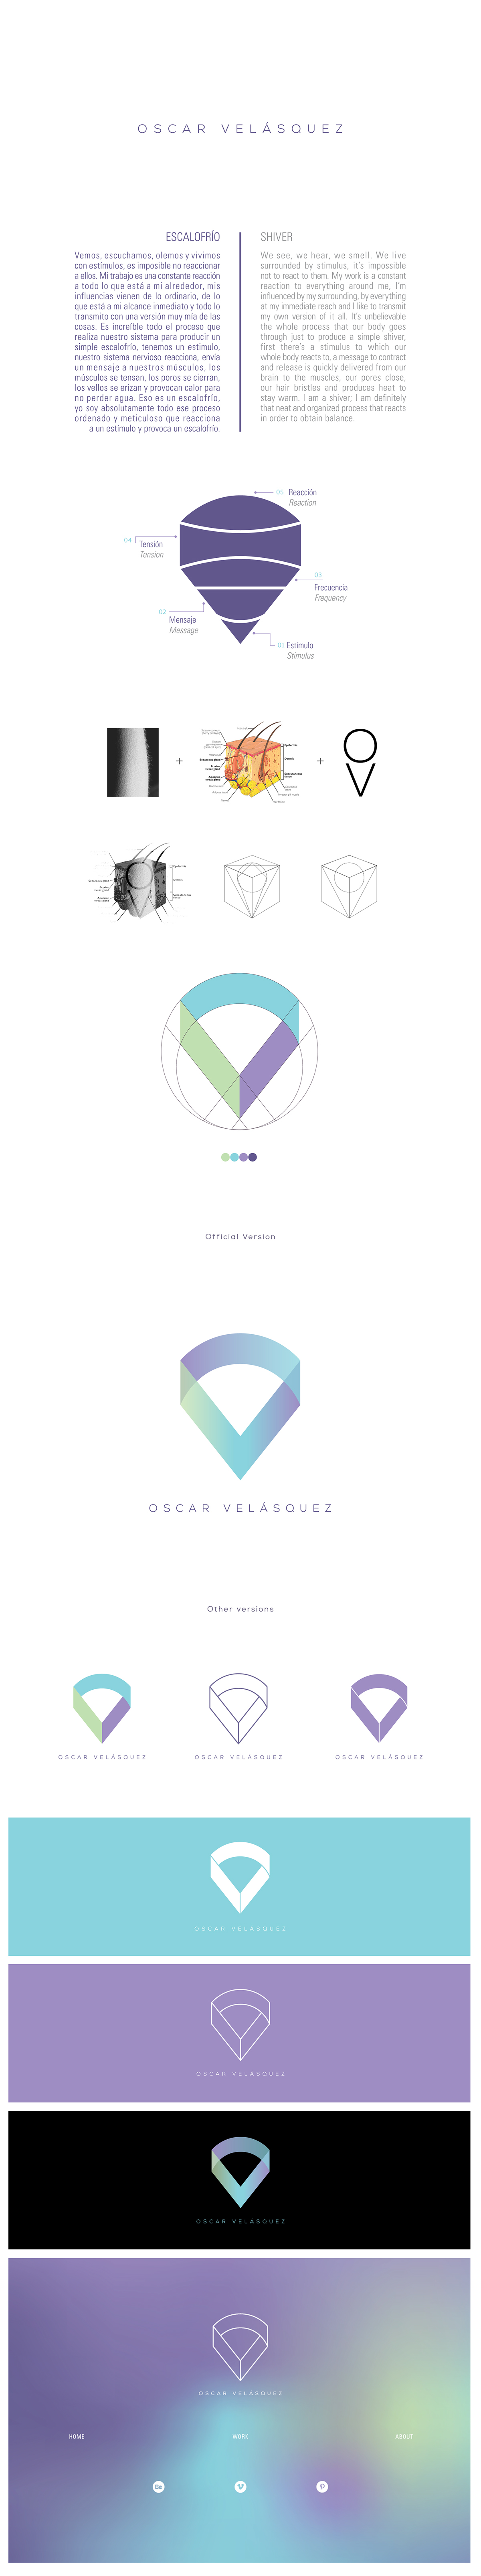 personal branding oscar velasquez Logotype brand guidelines brand construction iridescent El Salvador